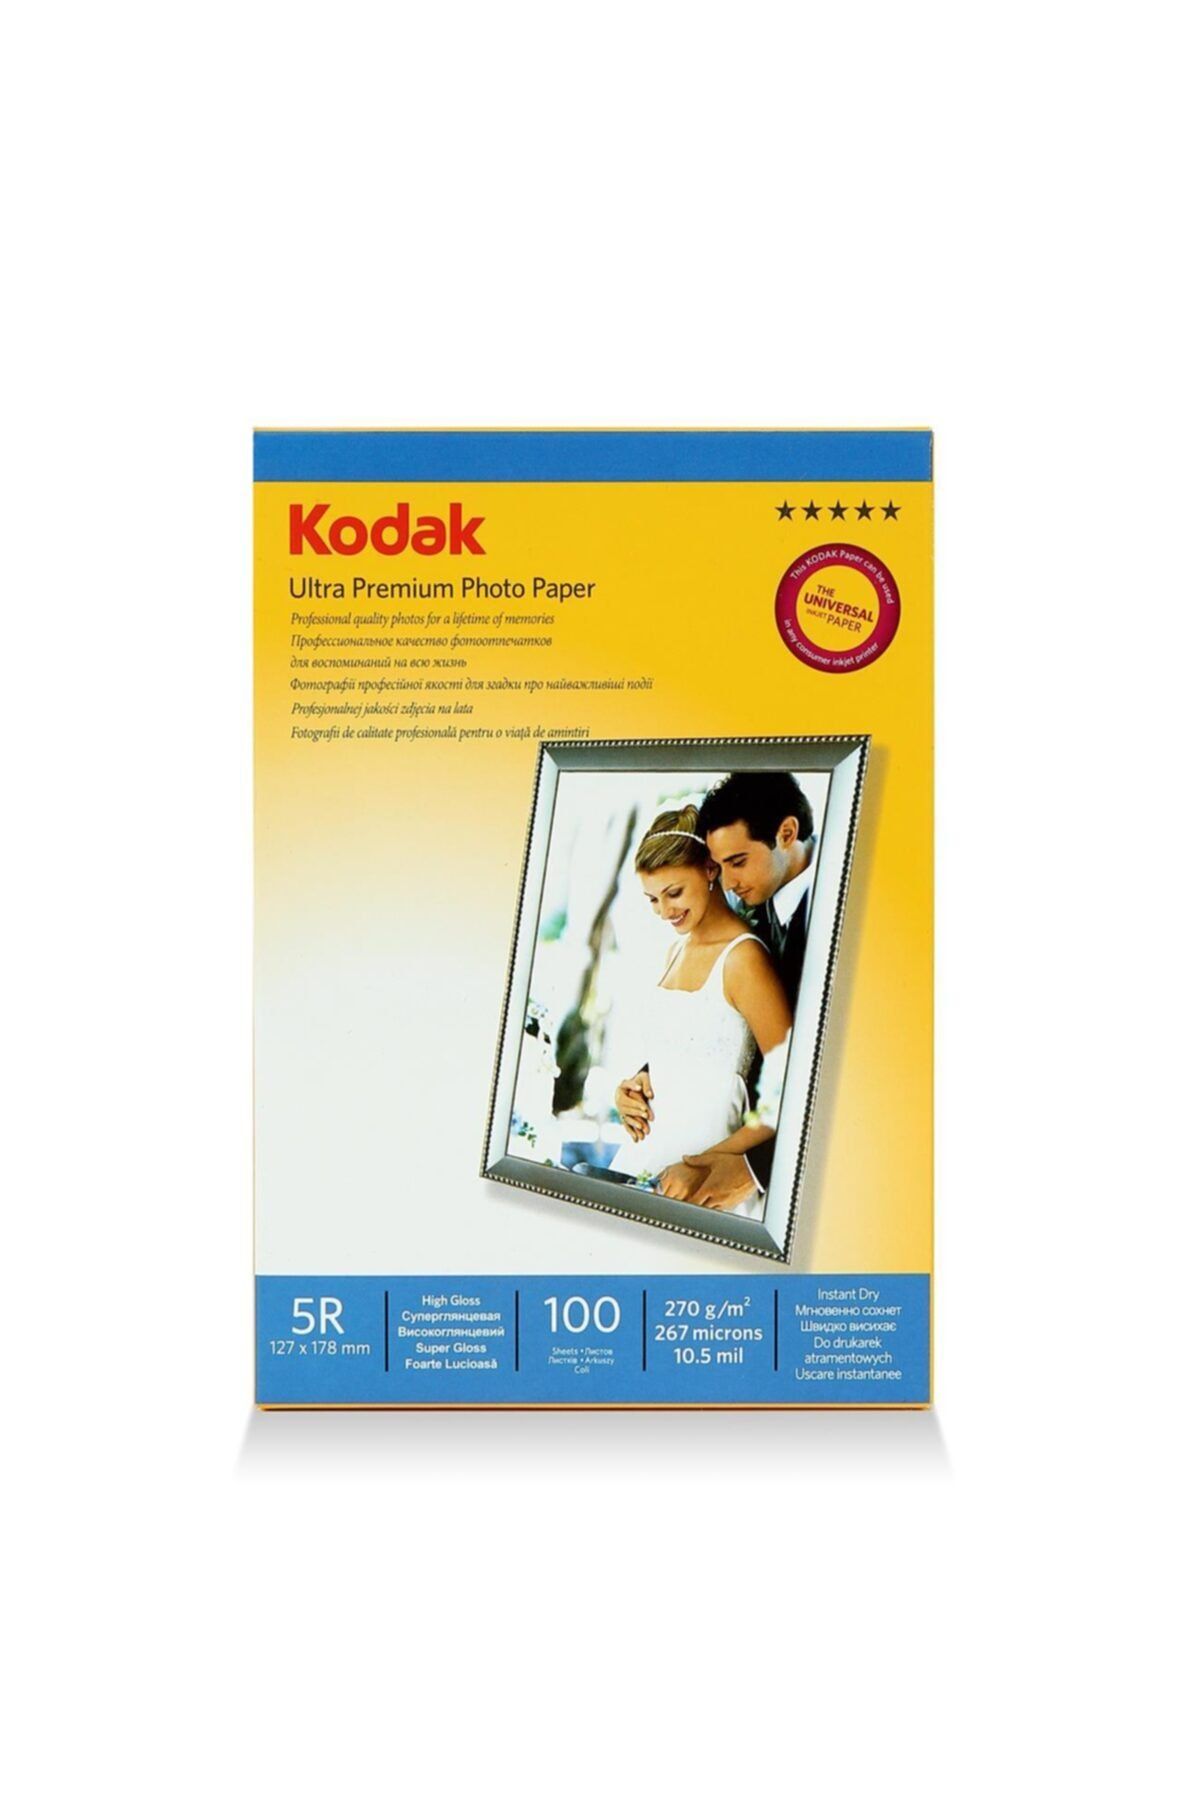 Kodak Photo Paper 5r Glossy-parlak (13x18-100'lük) 270g